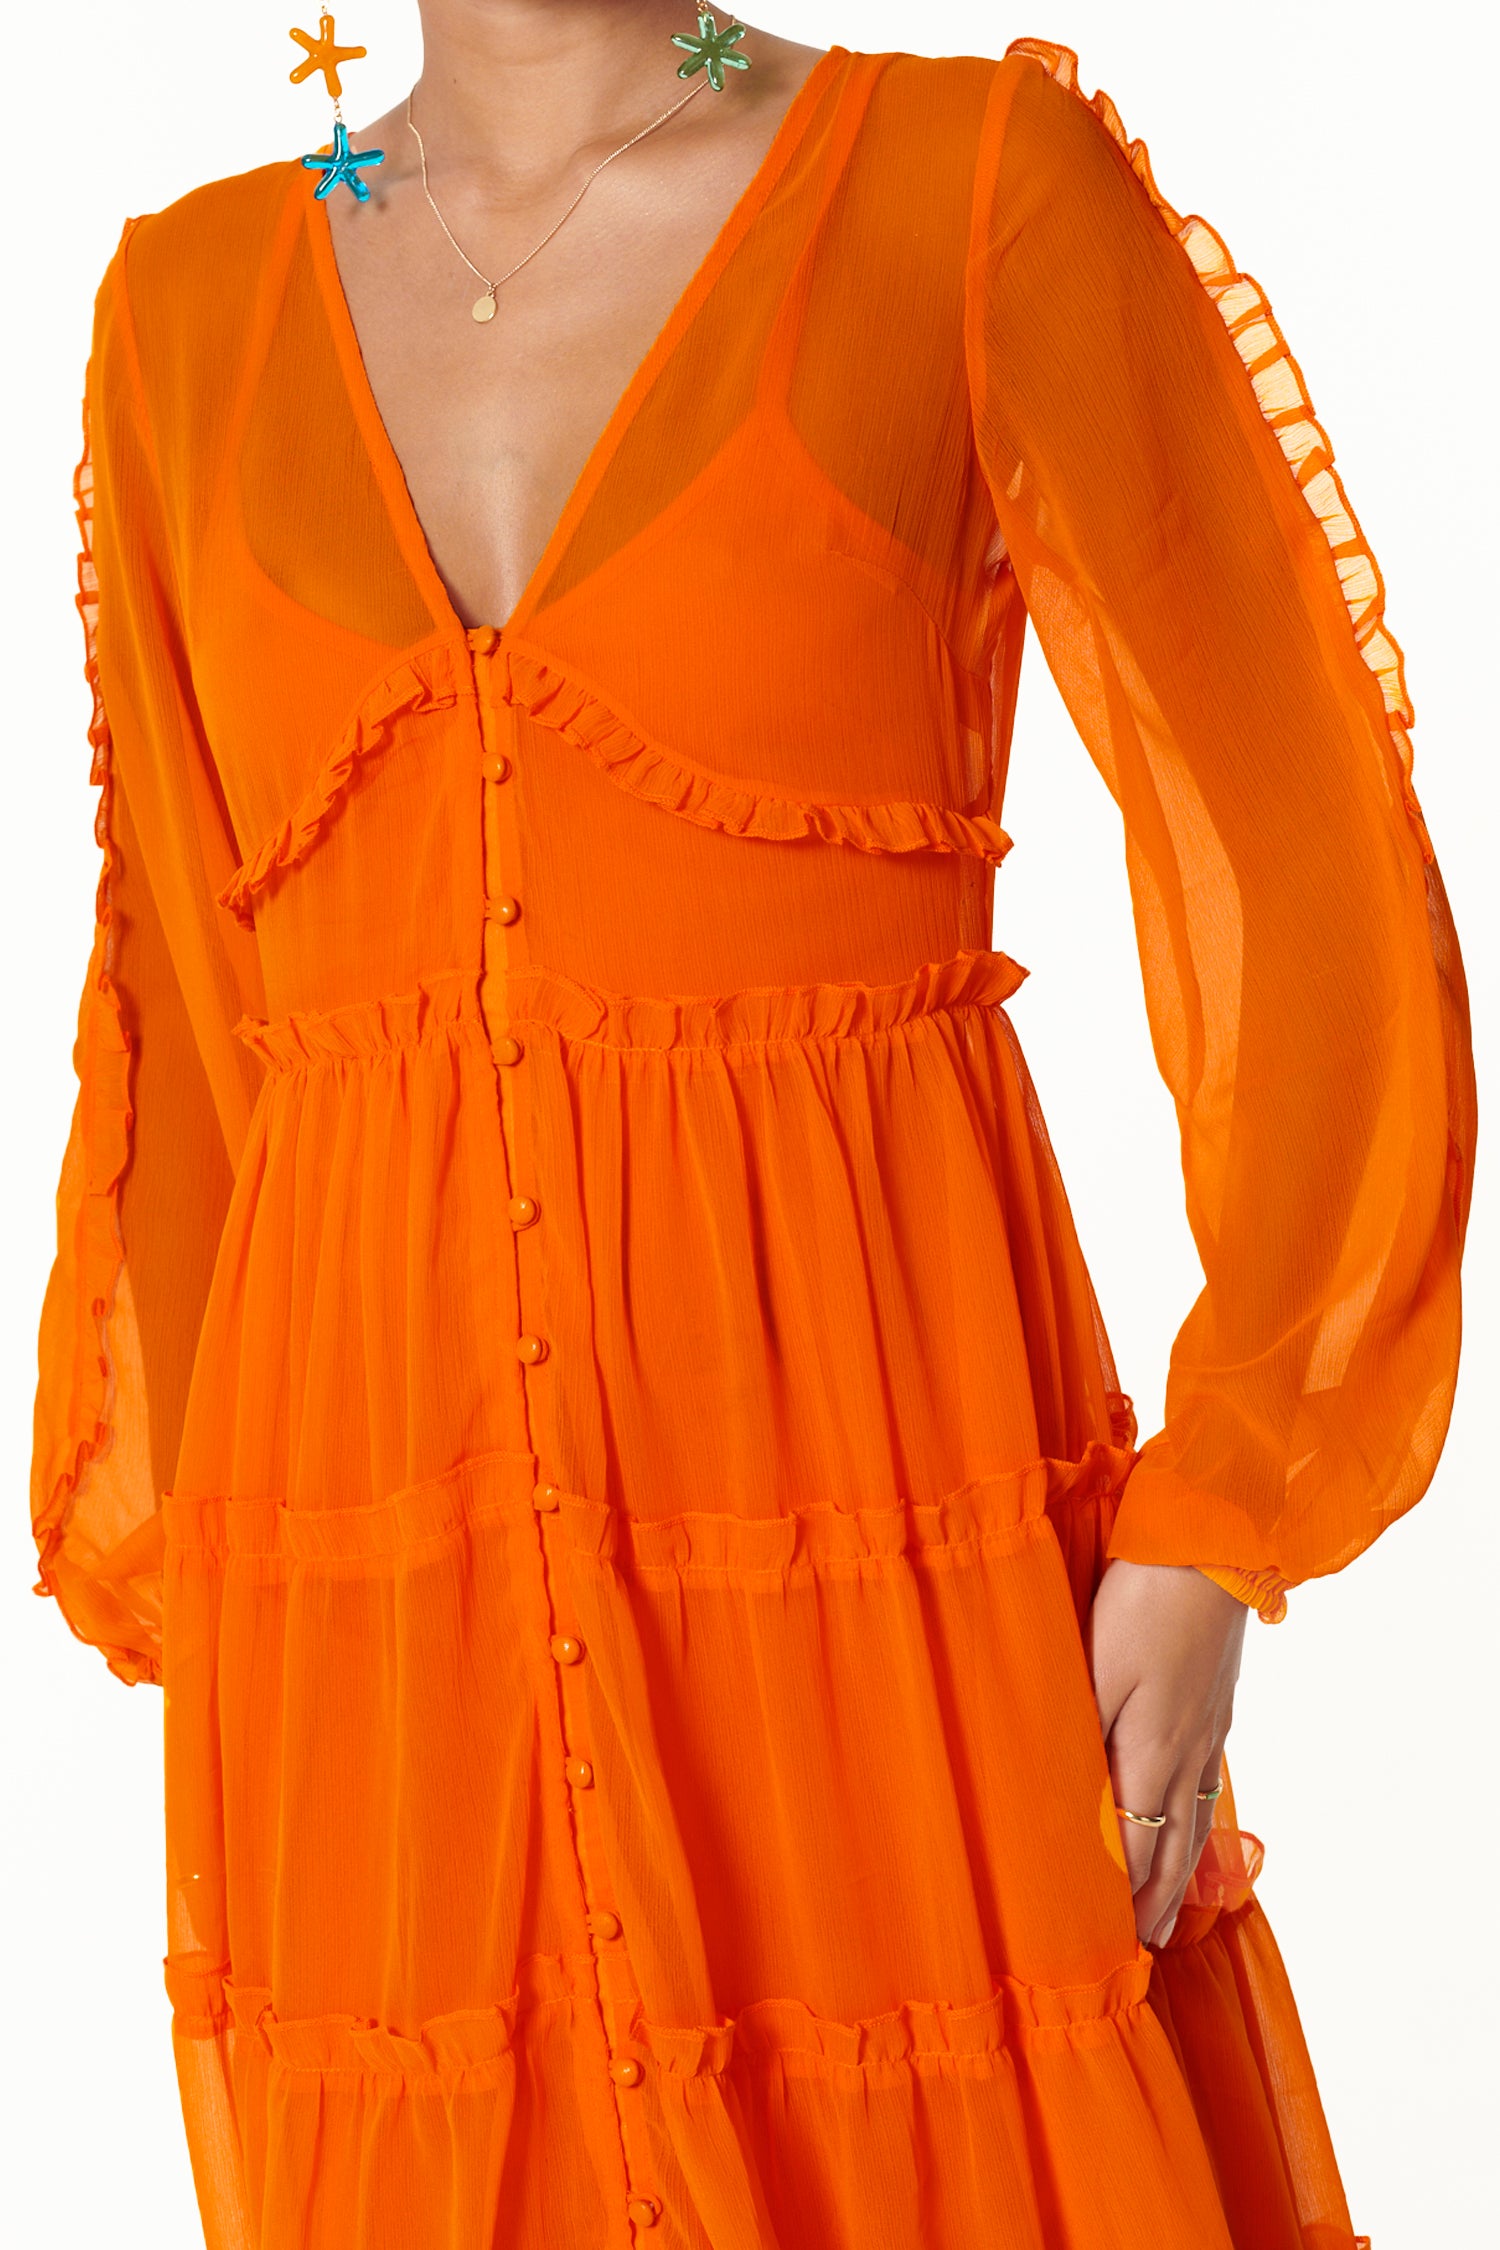 Model wearing Orange Clemmie Dress close up